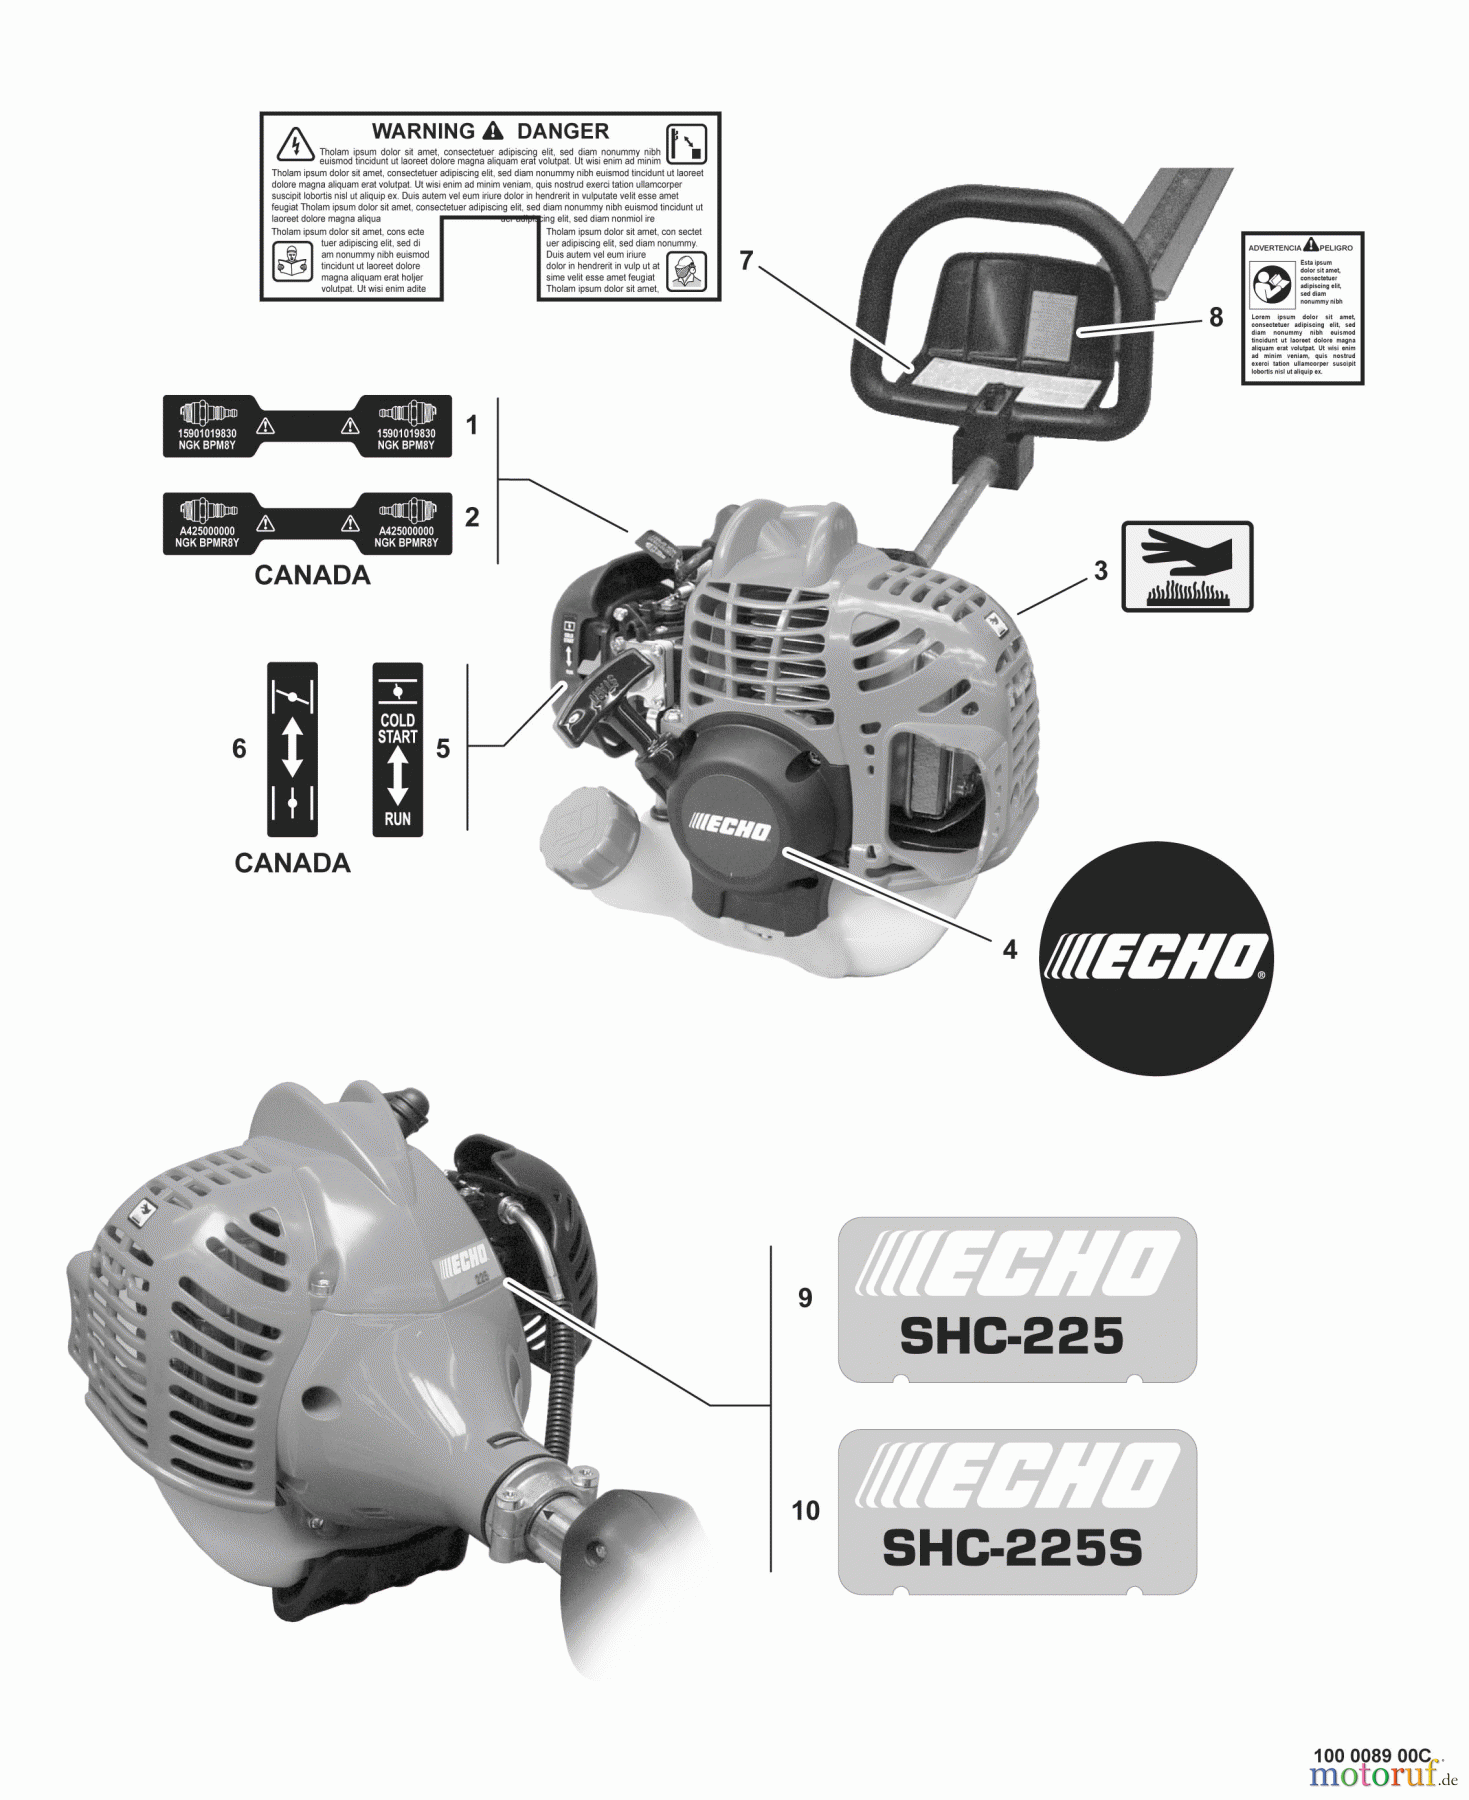  Echo Heckenscheren SHC-225S - Echo Shaft Hedge Trimmer, S/N: S86012001001 - S86012999999 Labels